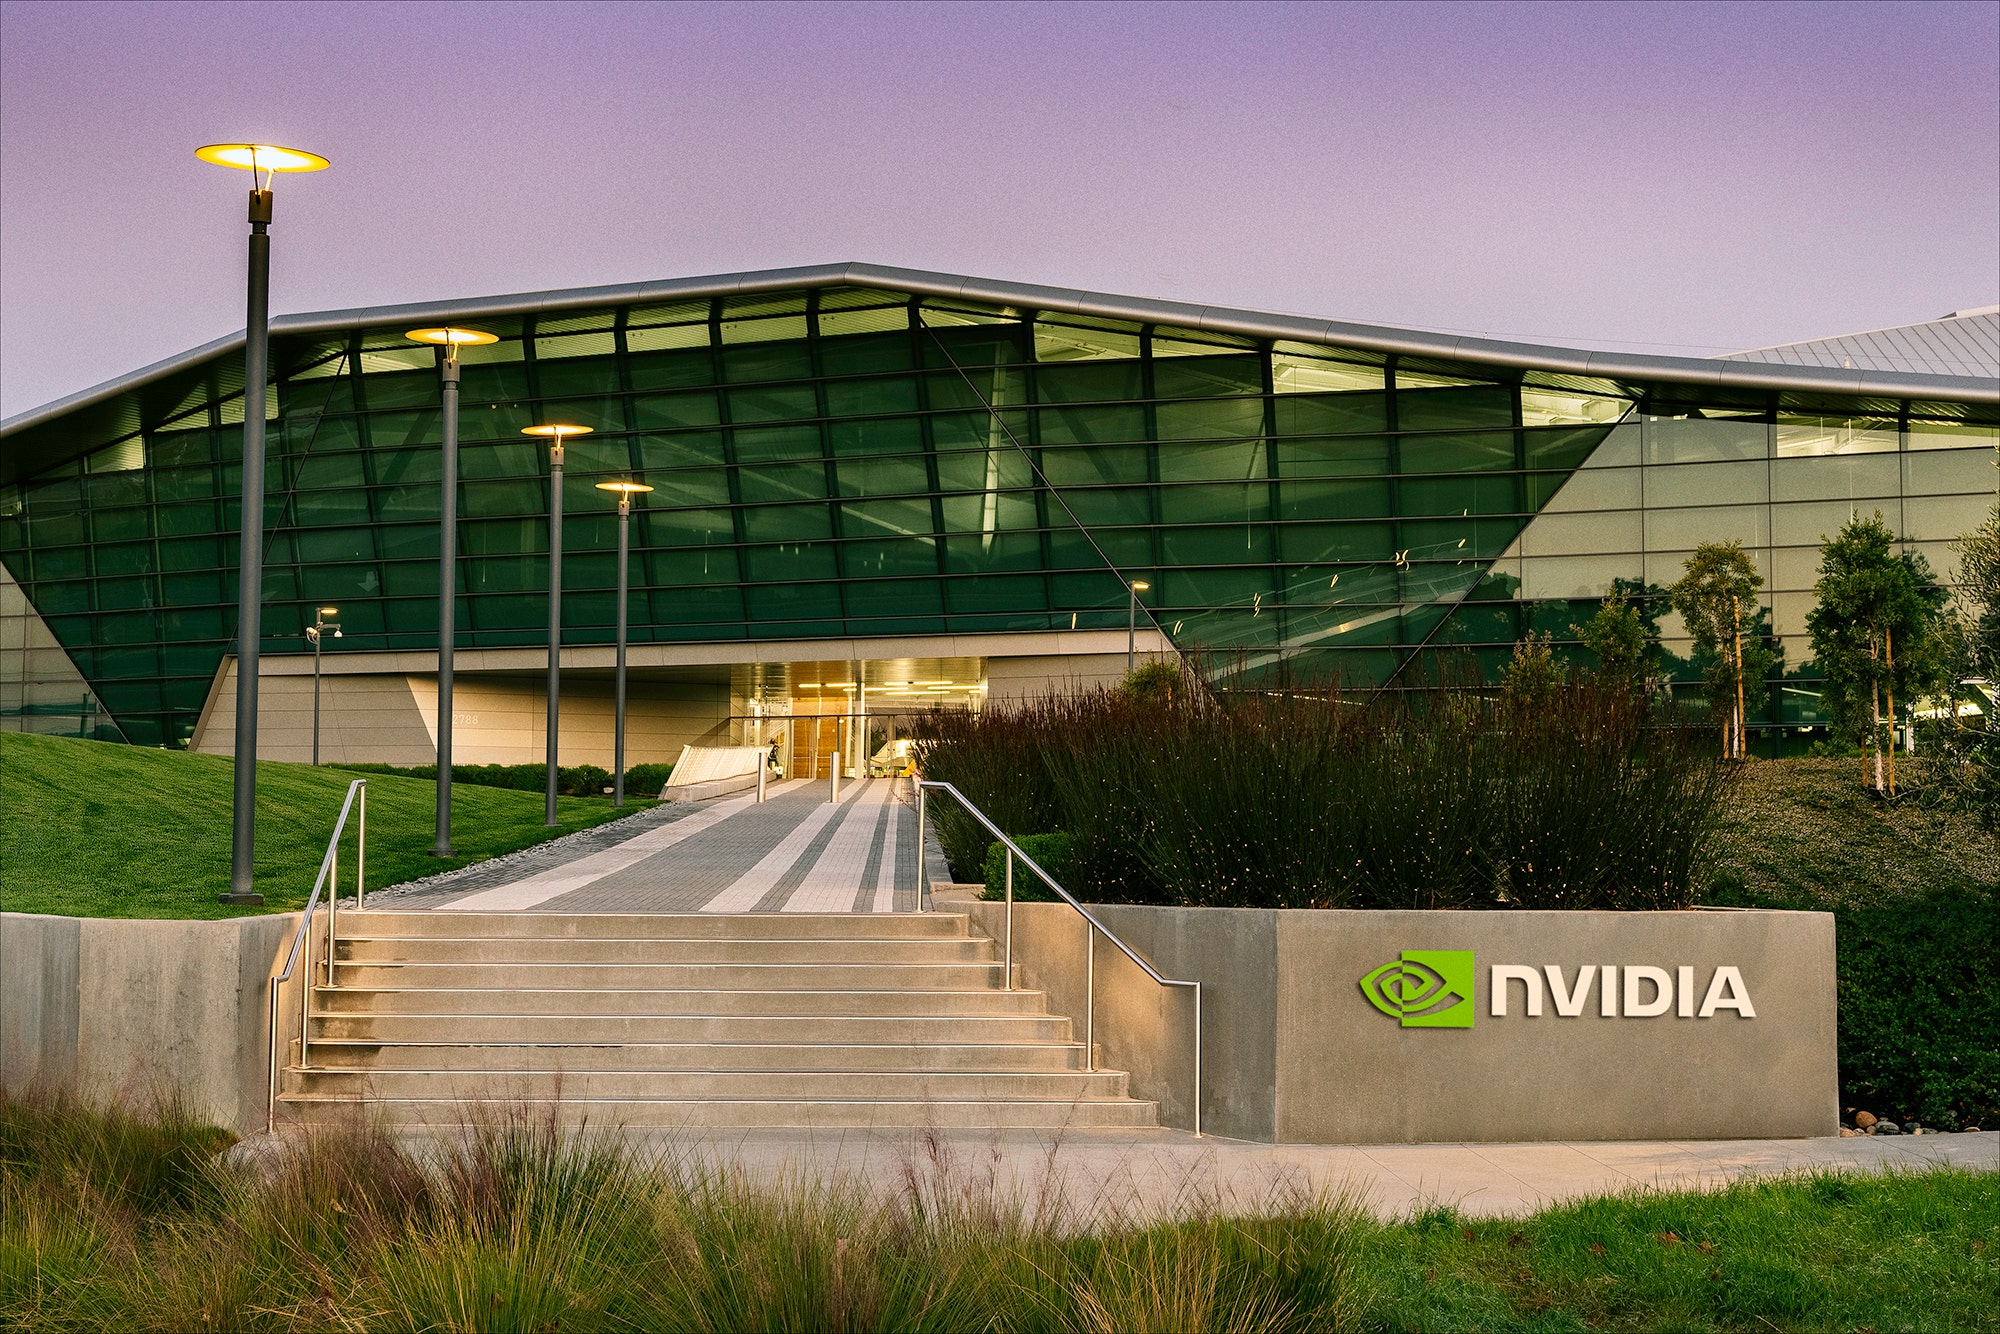 Semiconductor Stocks Pressured Following Nvidia's Q2 Preannouncement